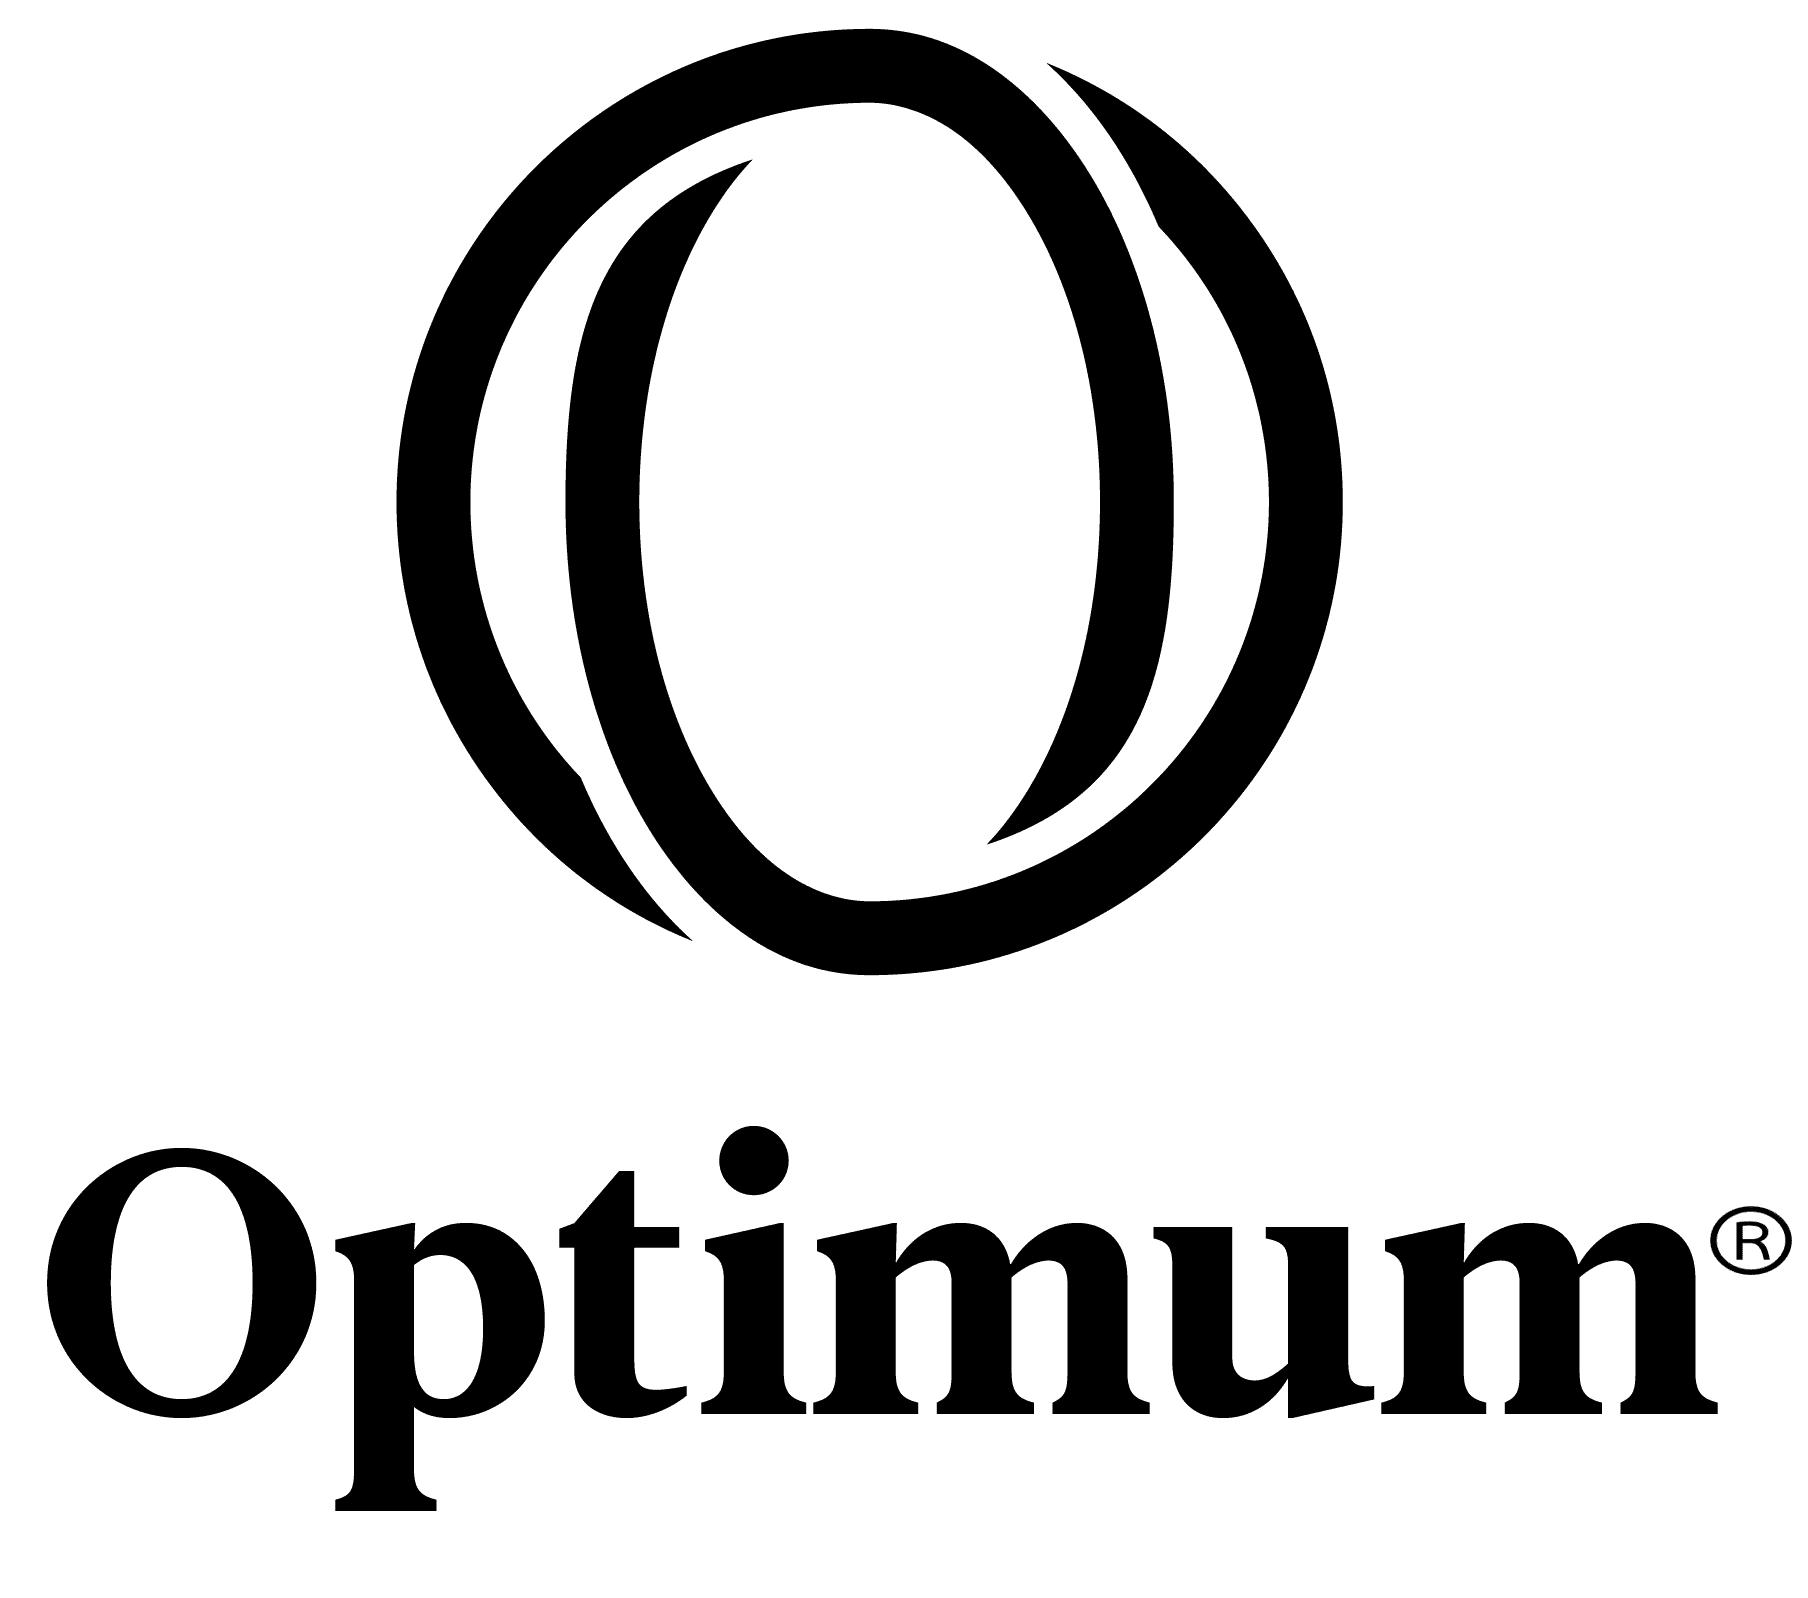 Black Optimum Human logo.